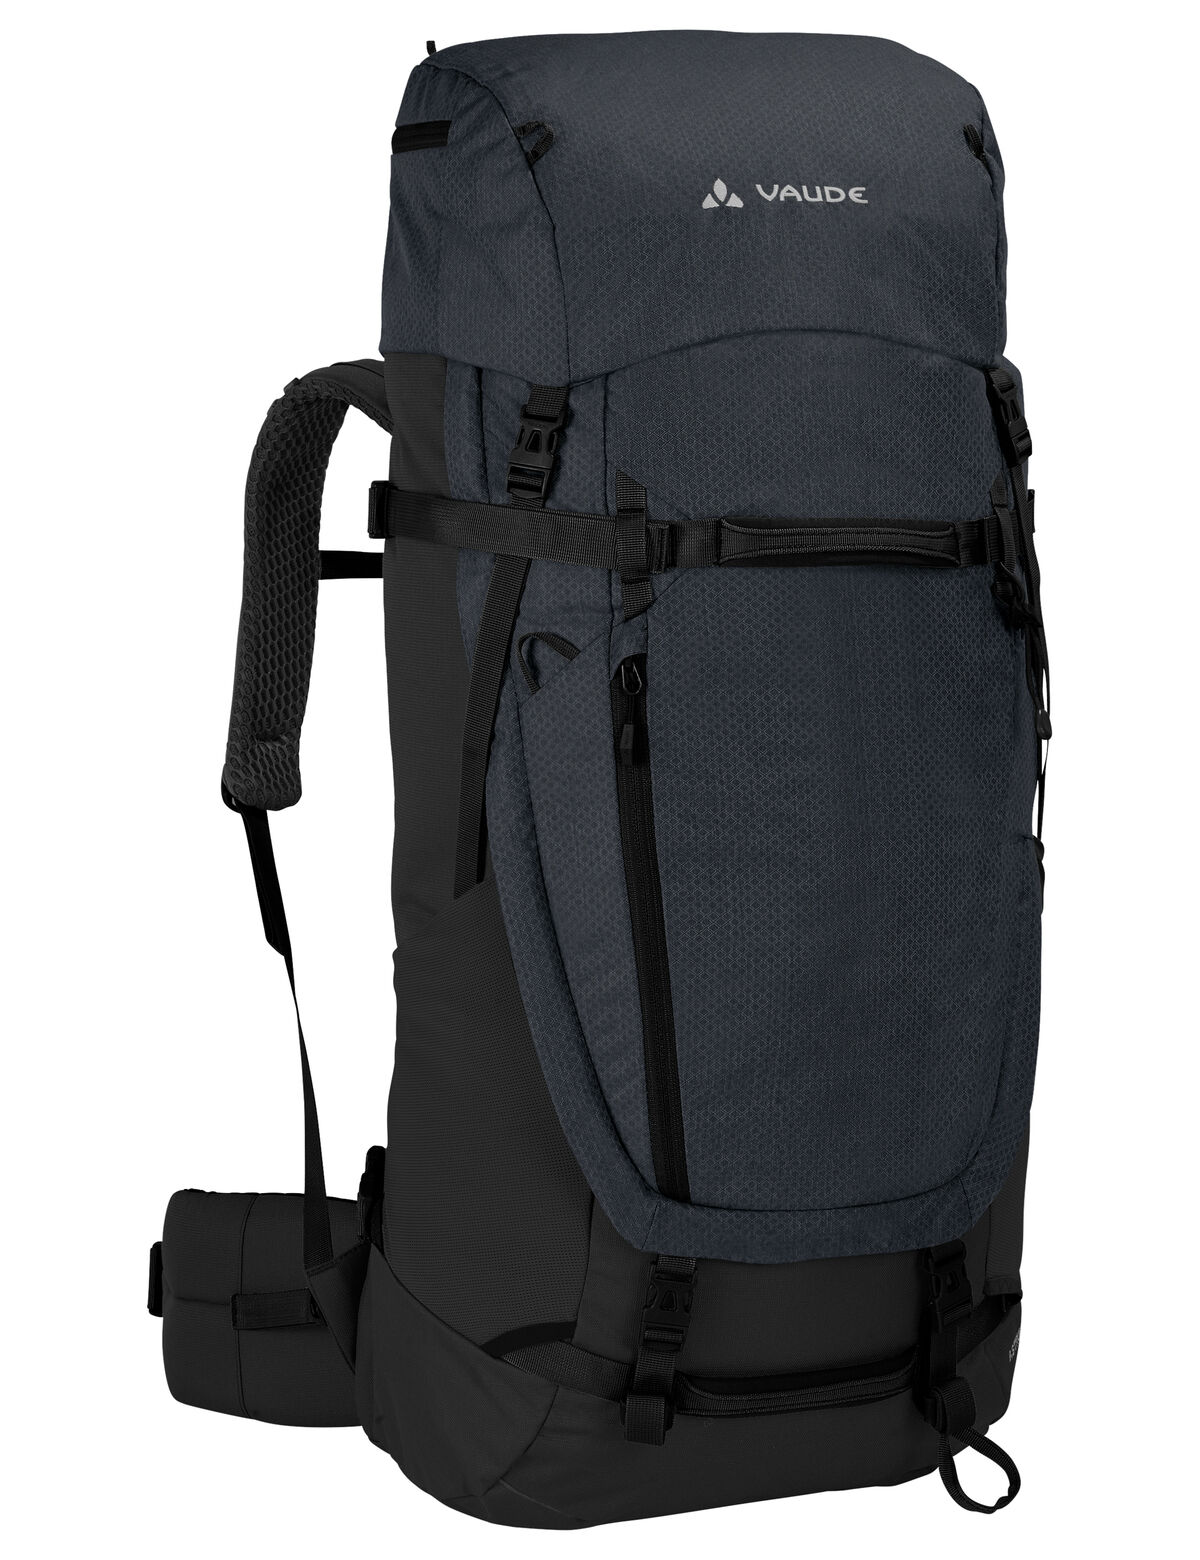 Vaude - Astrum EVO 75+10 XL - Hiking backpack